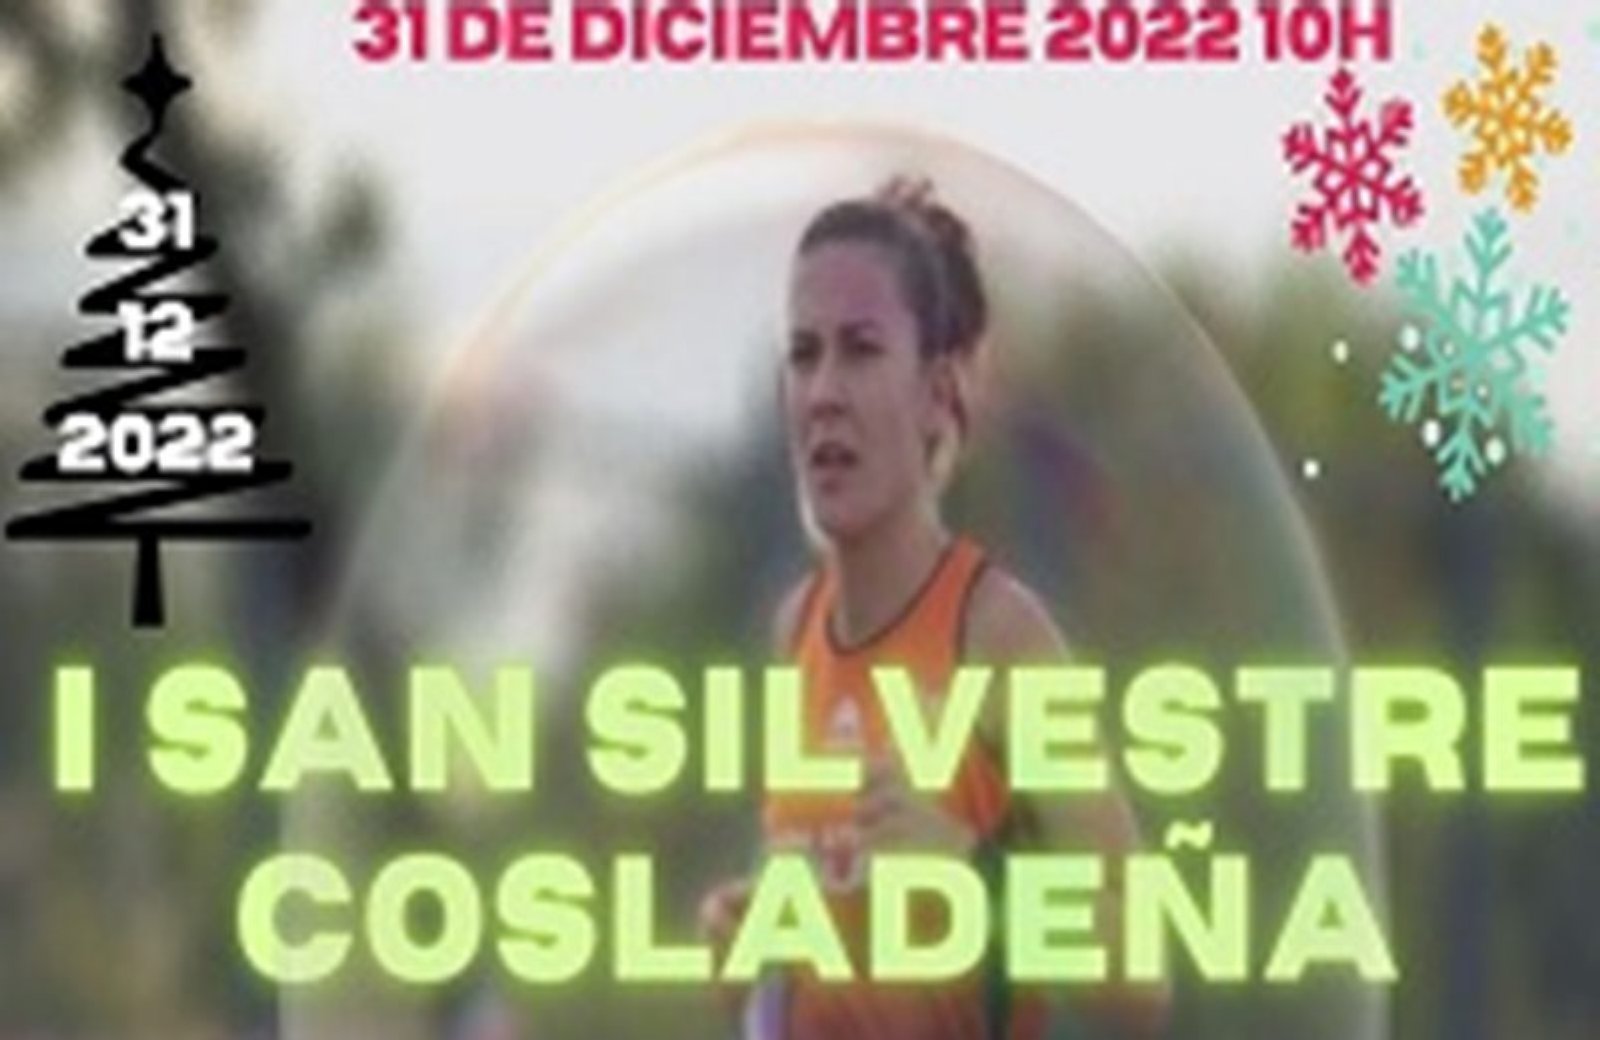 La I San Silvestre Cosladeña 2022